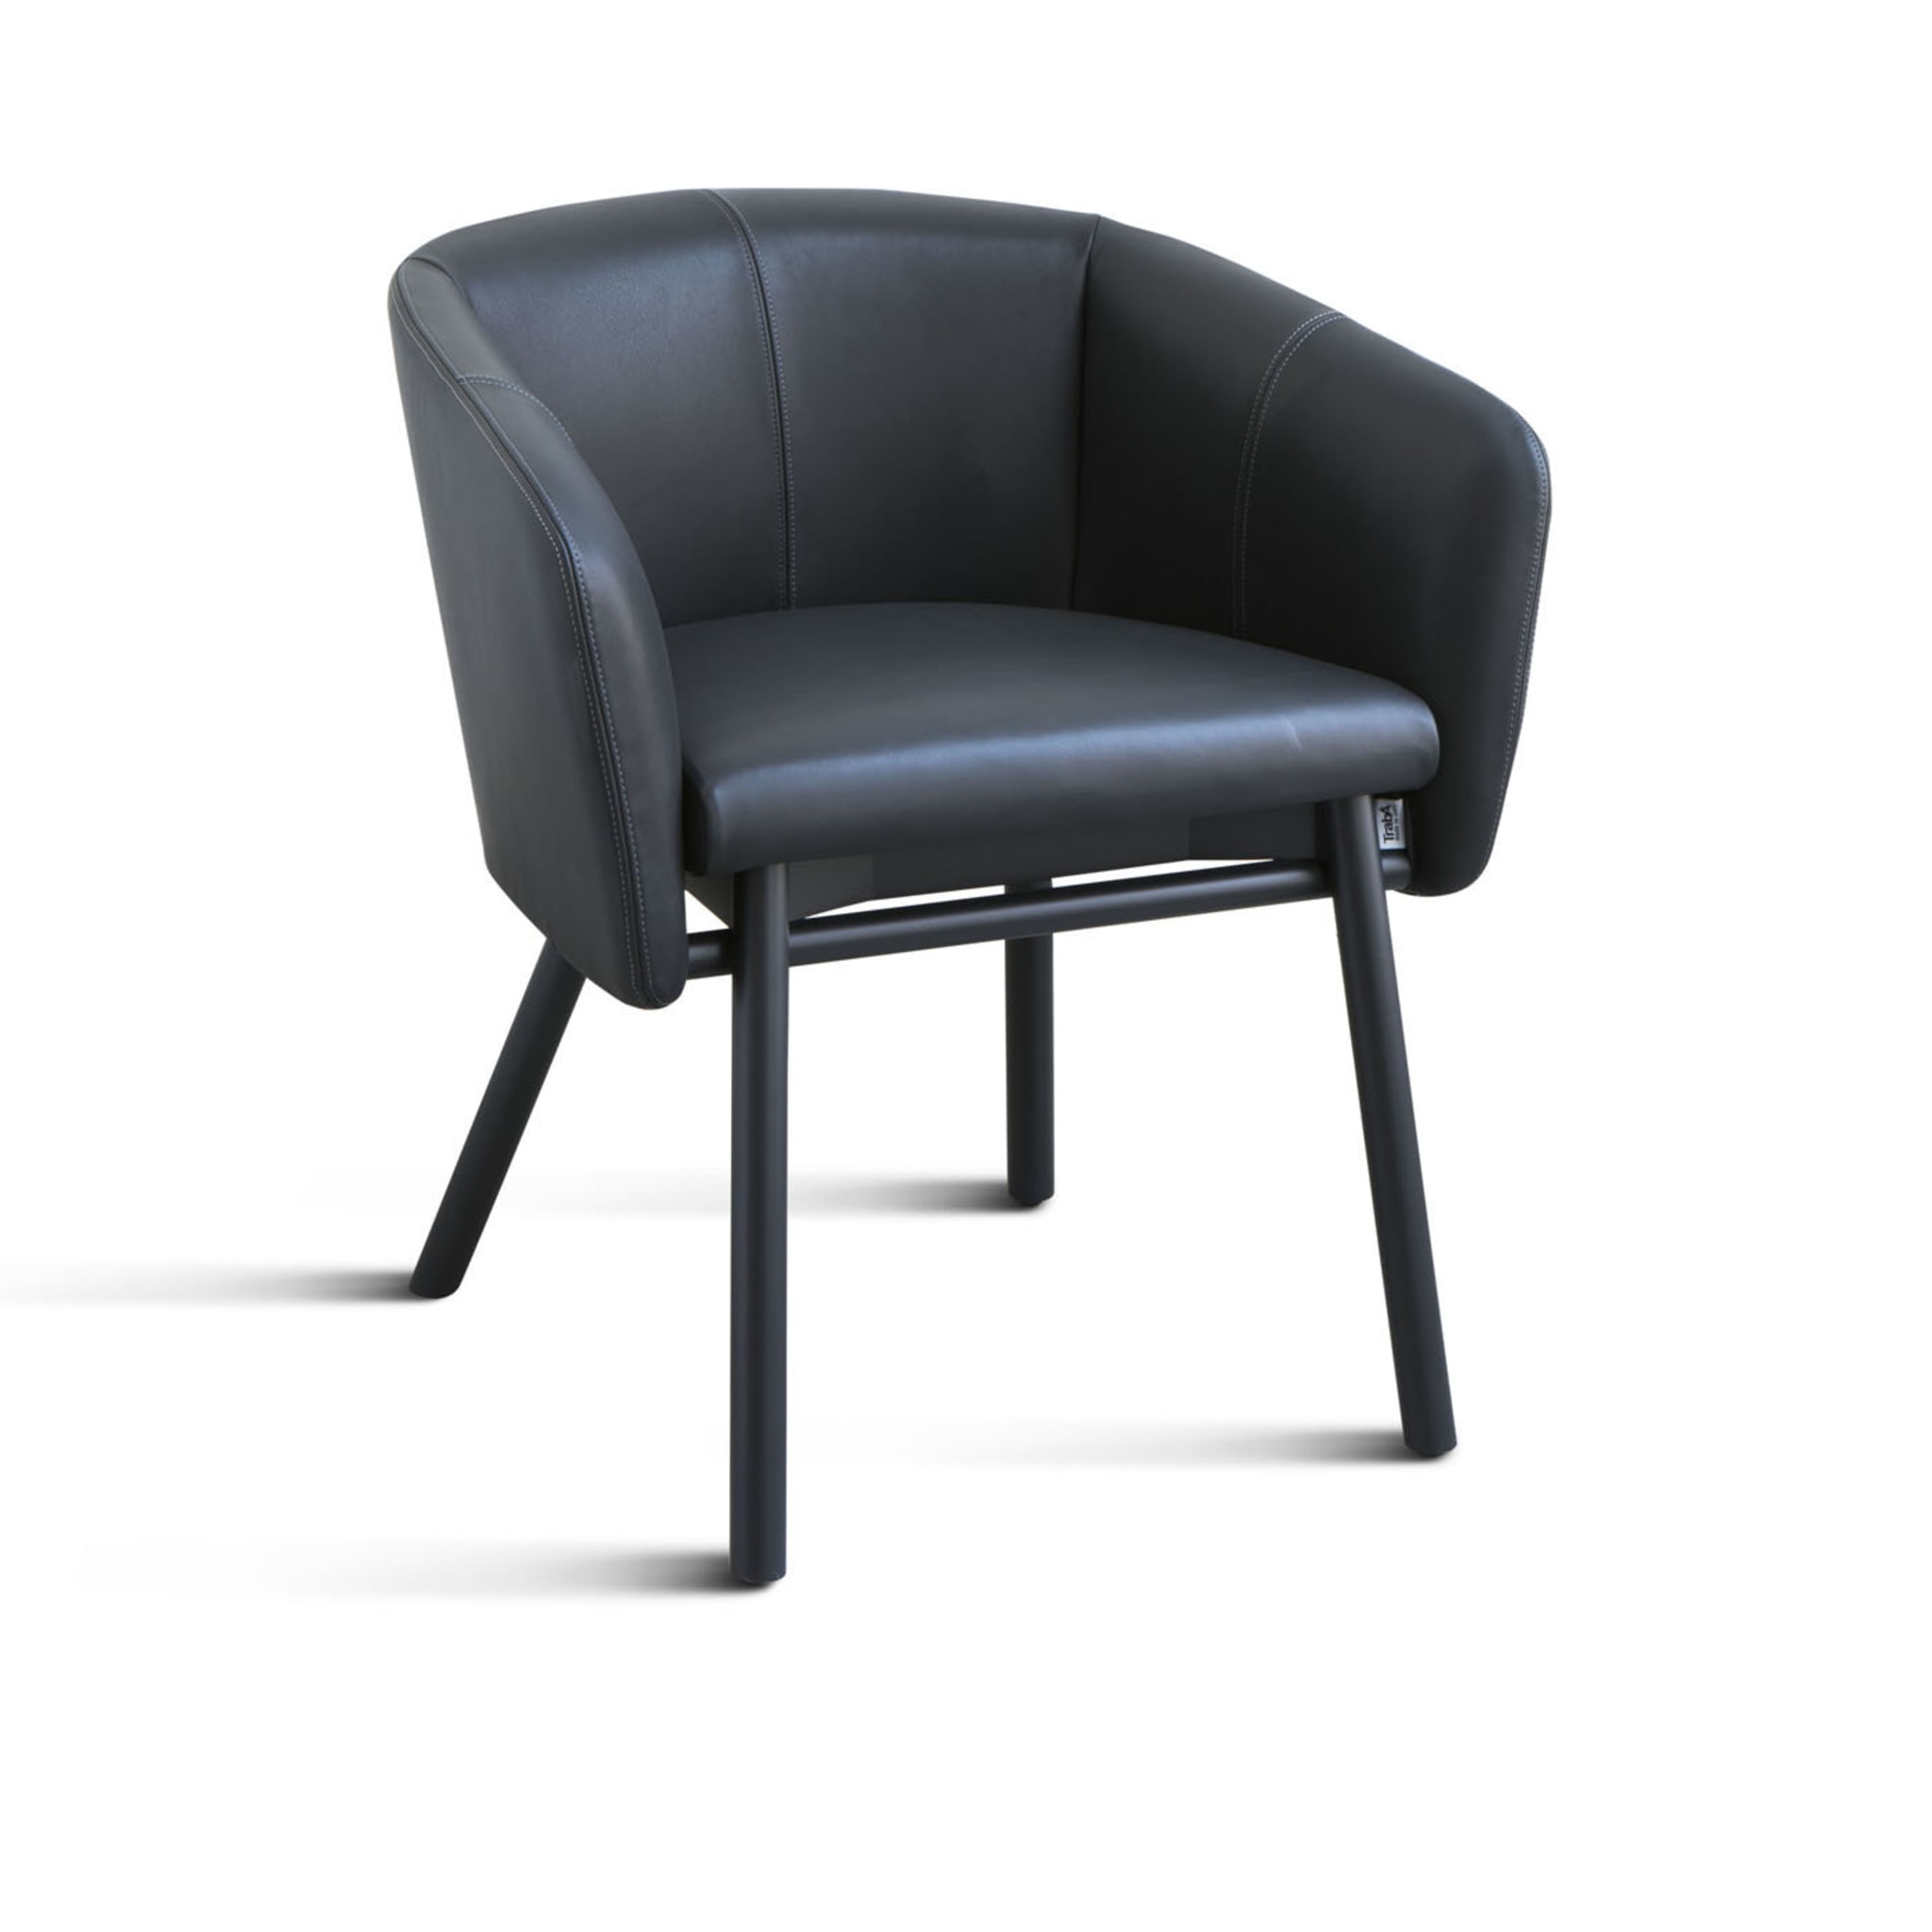 Balù Black Leather Chair By Emilio Nanni - Alternative view 1